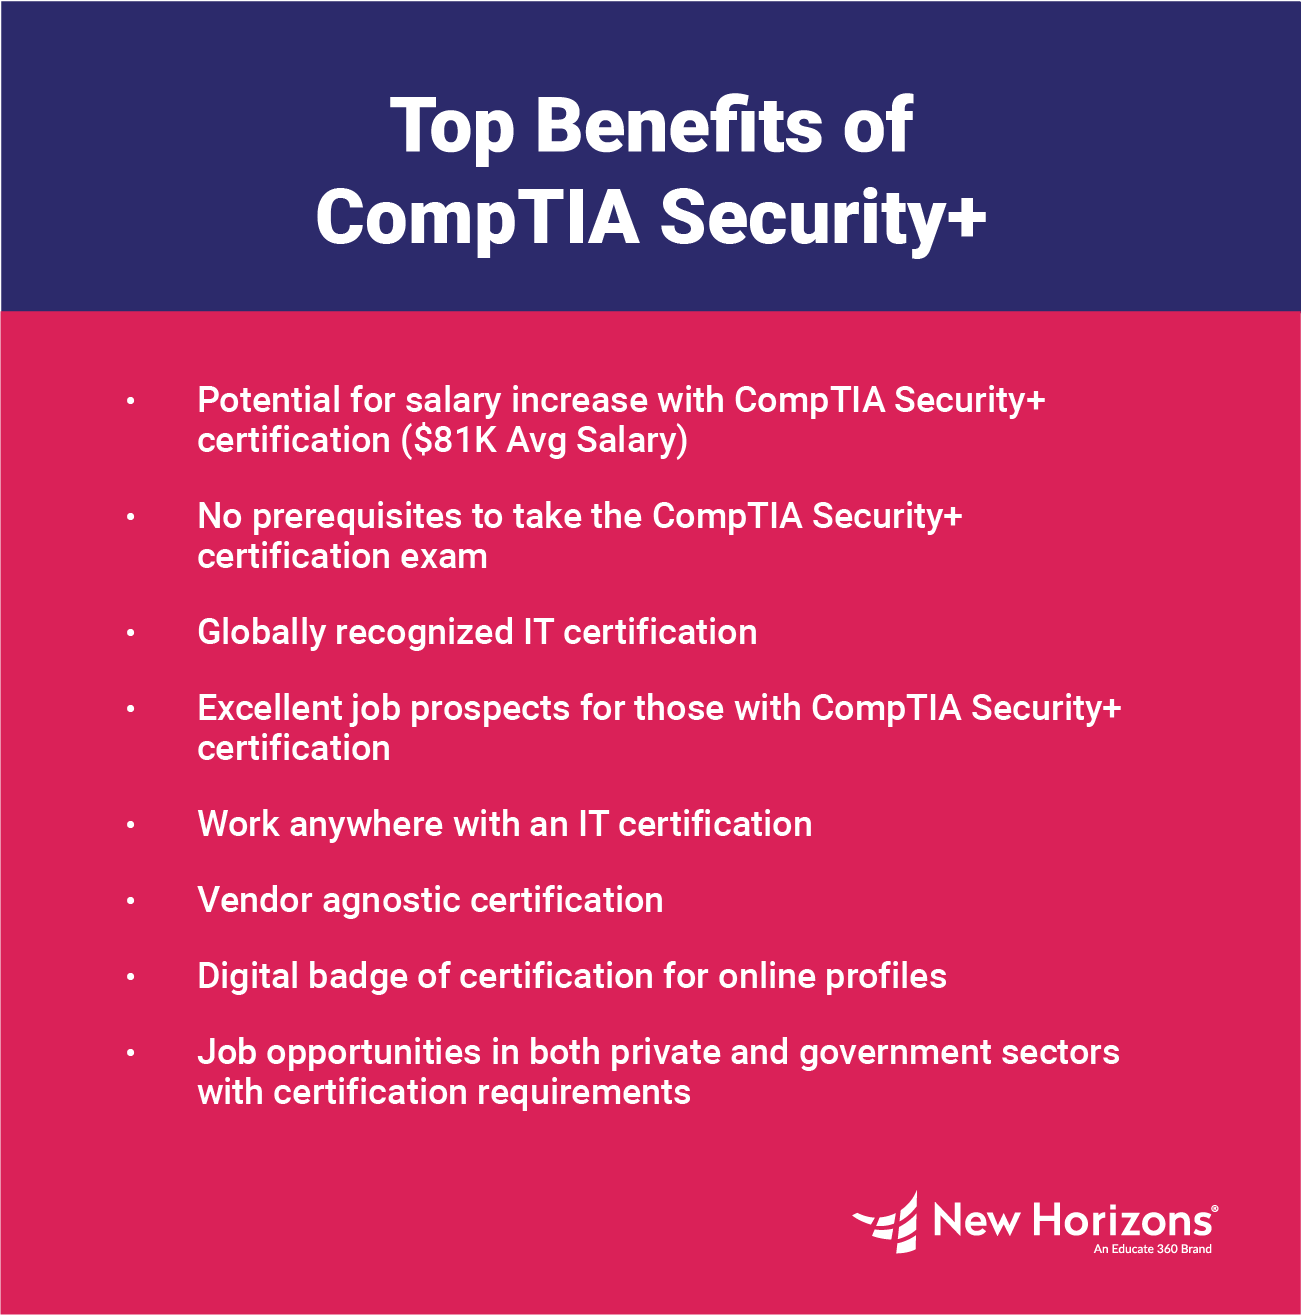 Top Benefits of CompTIA Security+